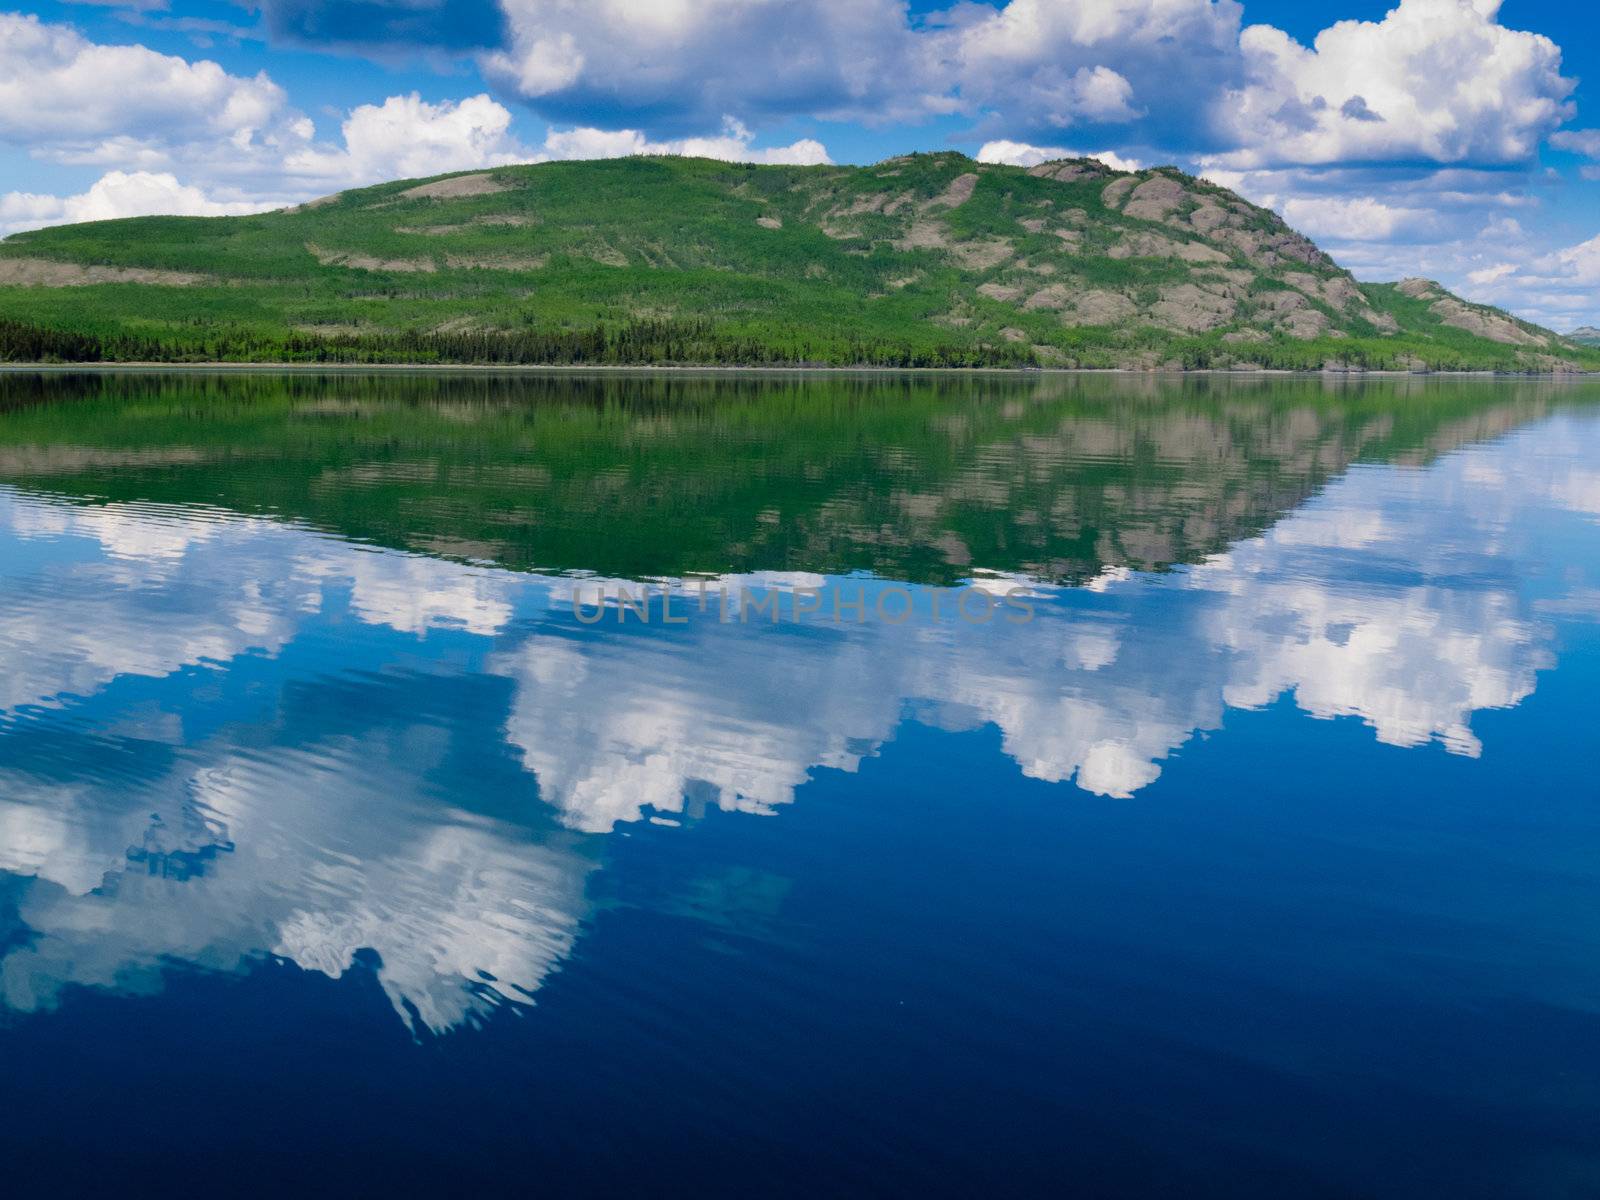 Yukon wilderness reflected on calm lake by PiLens